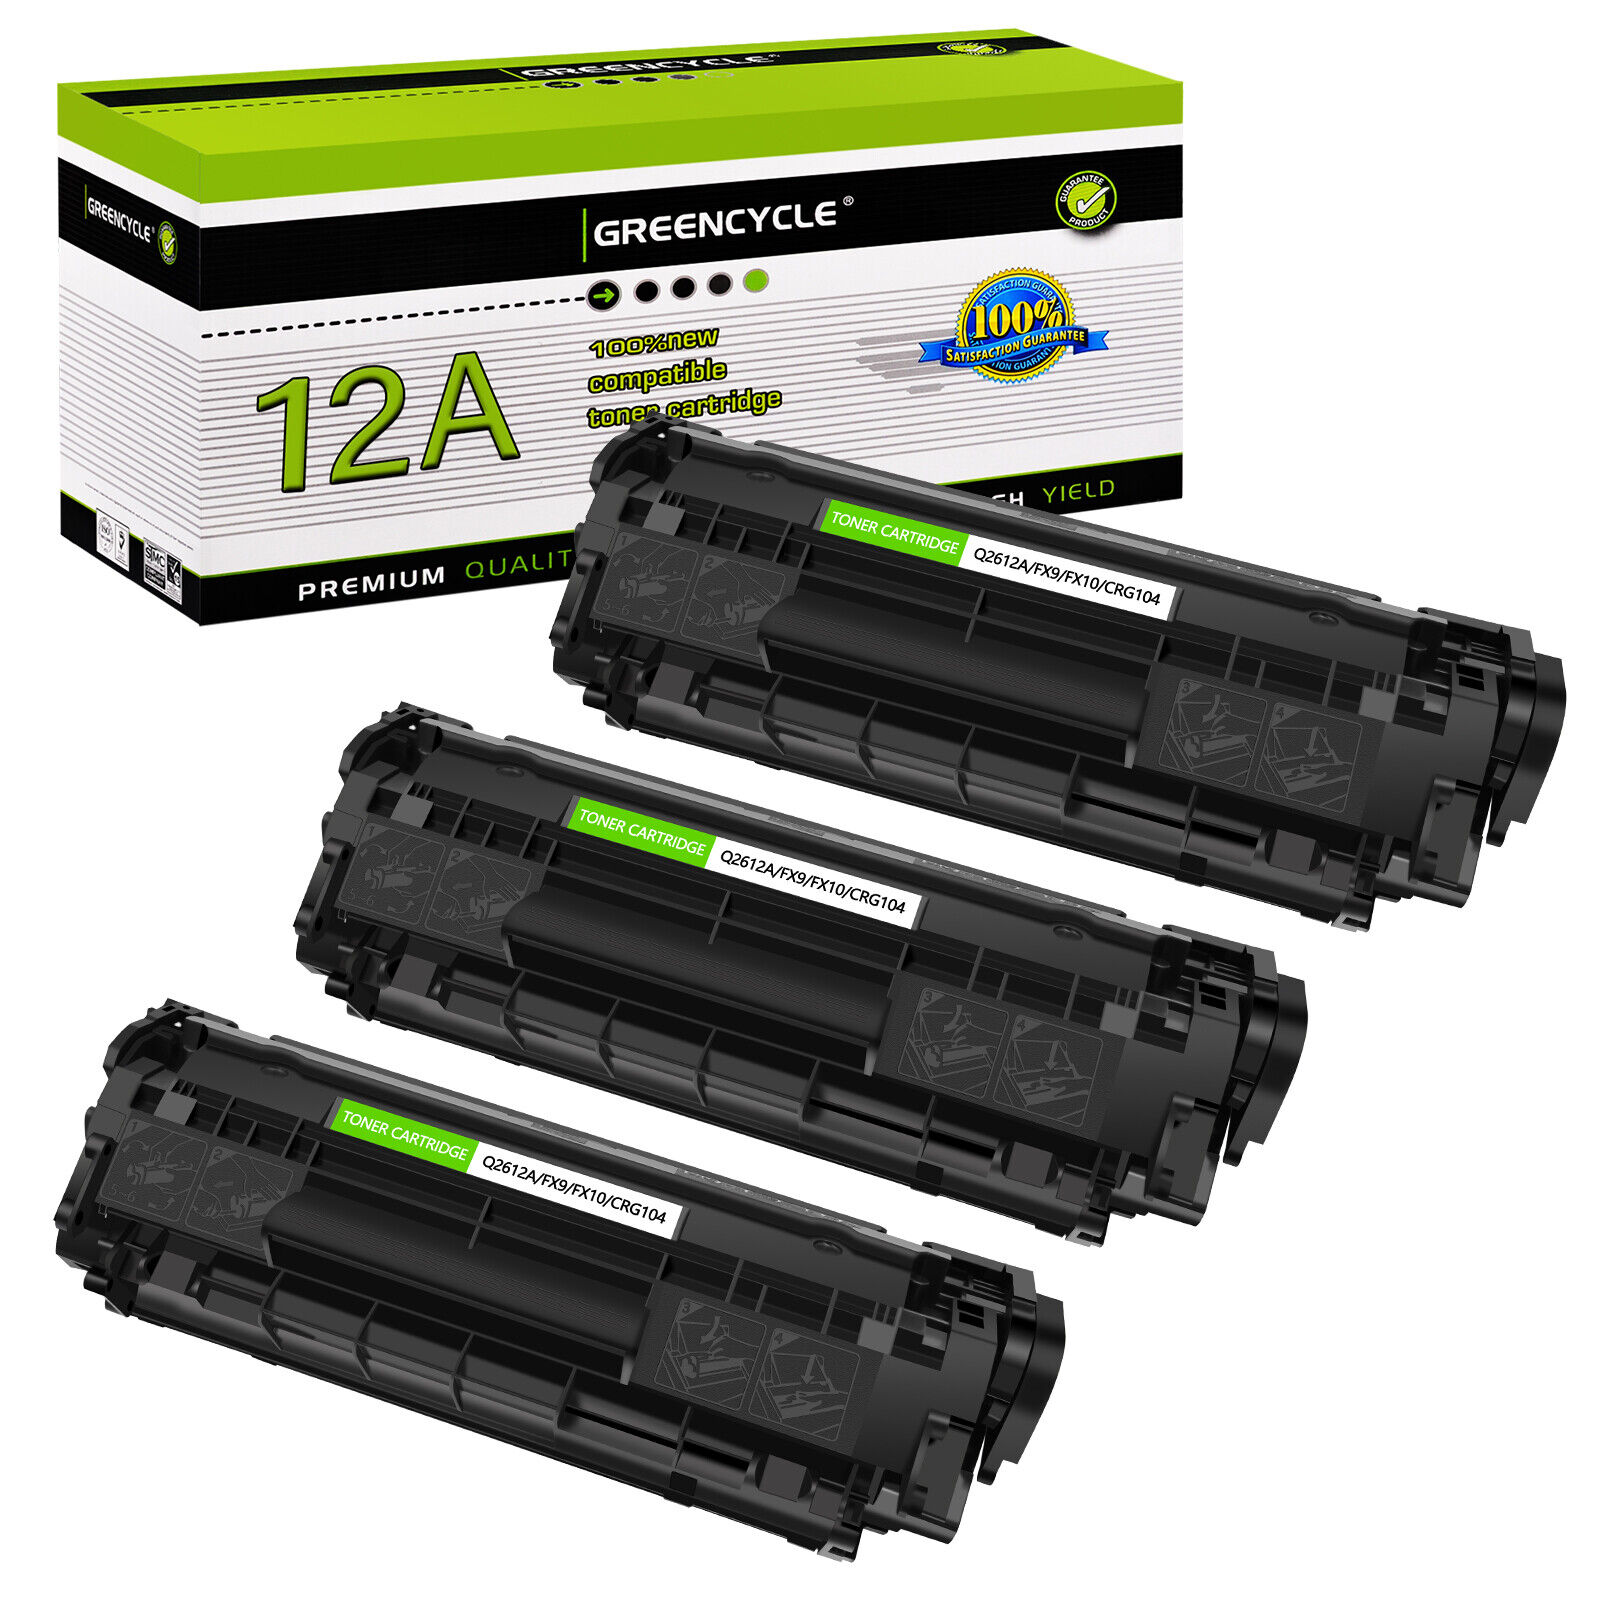 GREENCYCLE 3PK Q2612A 12A Toner For HP 12A LaserJet 1020 1022n 3050 3052 printer